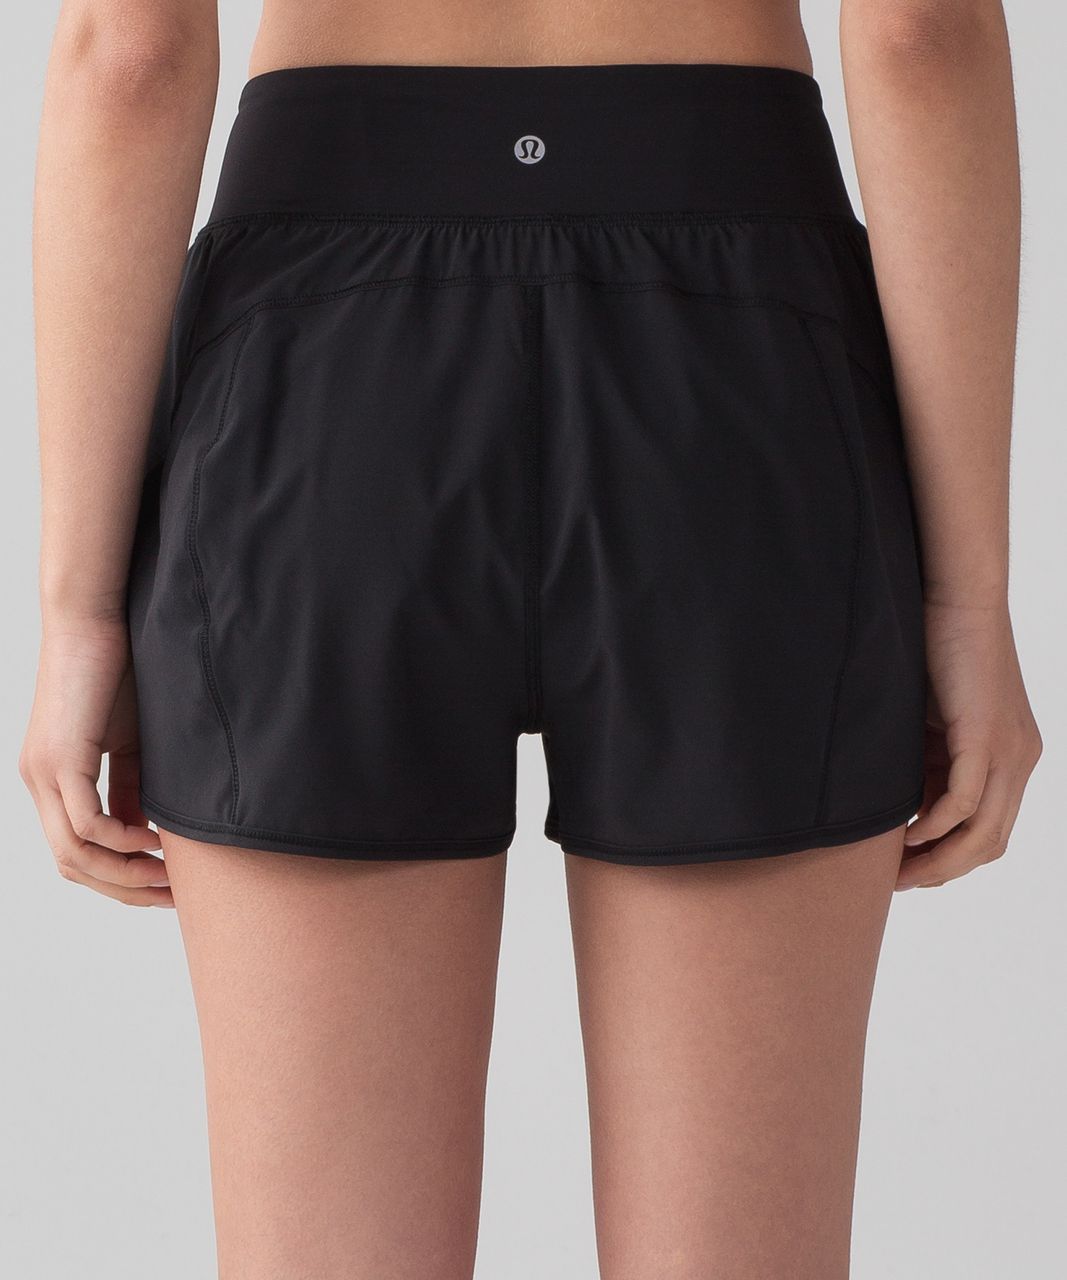 lulu shorts cheap